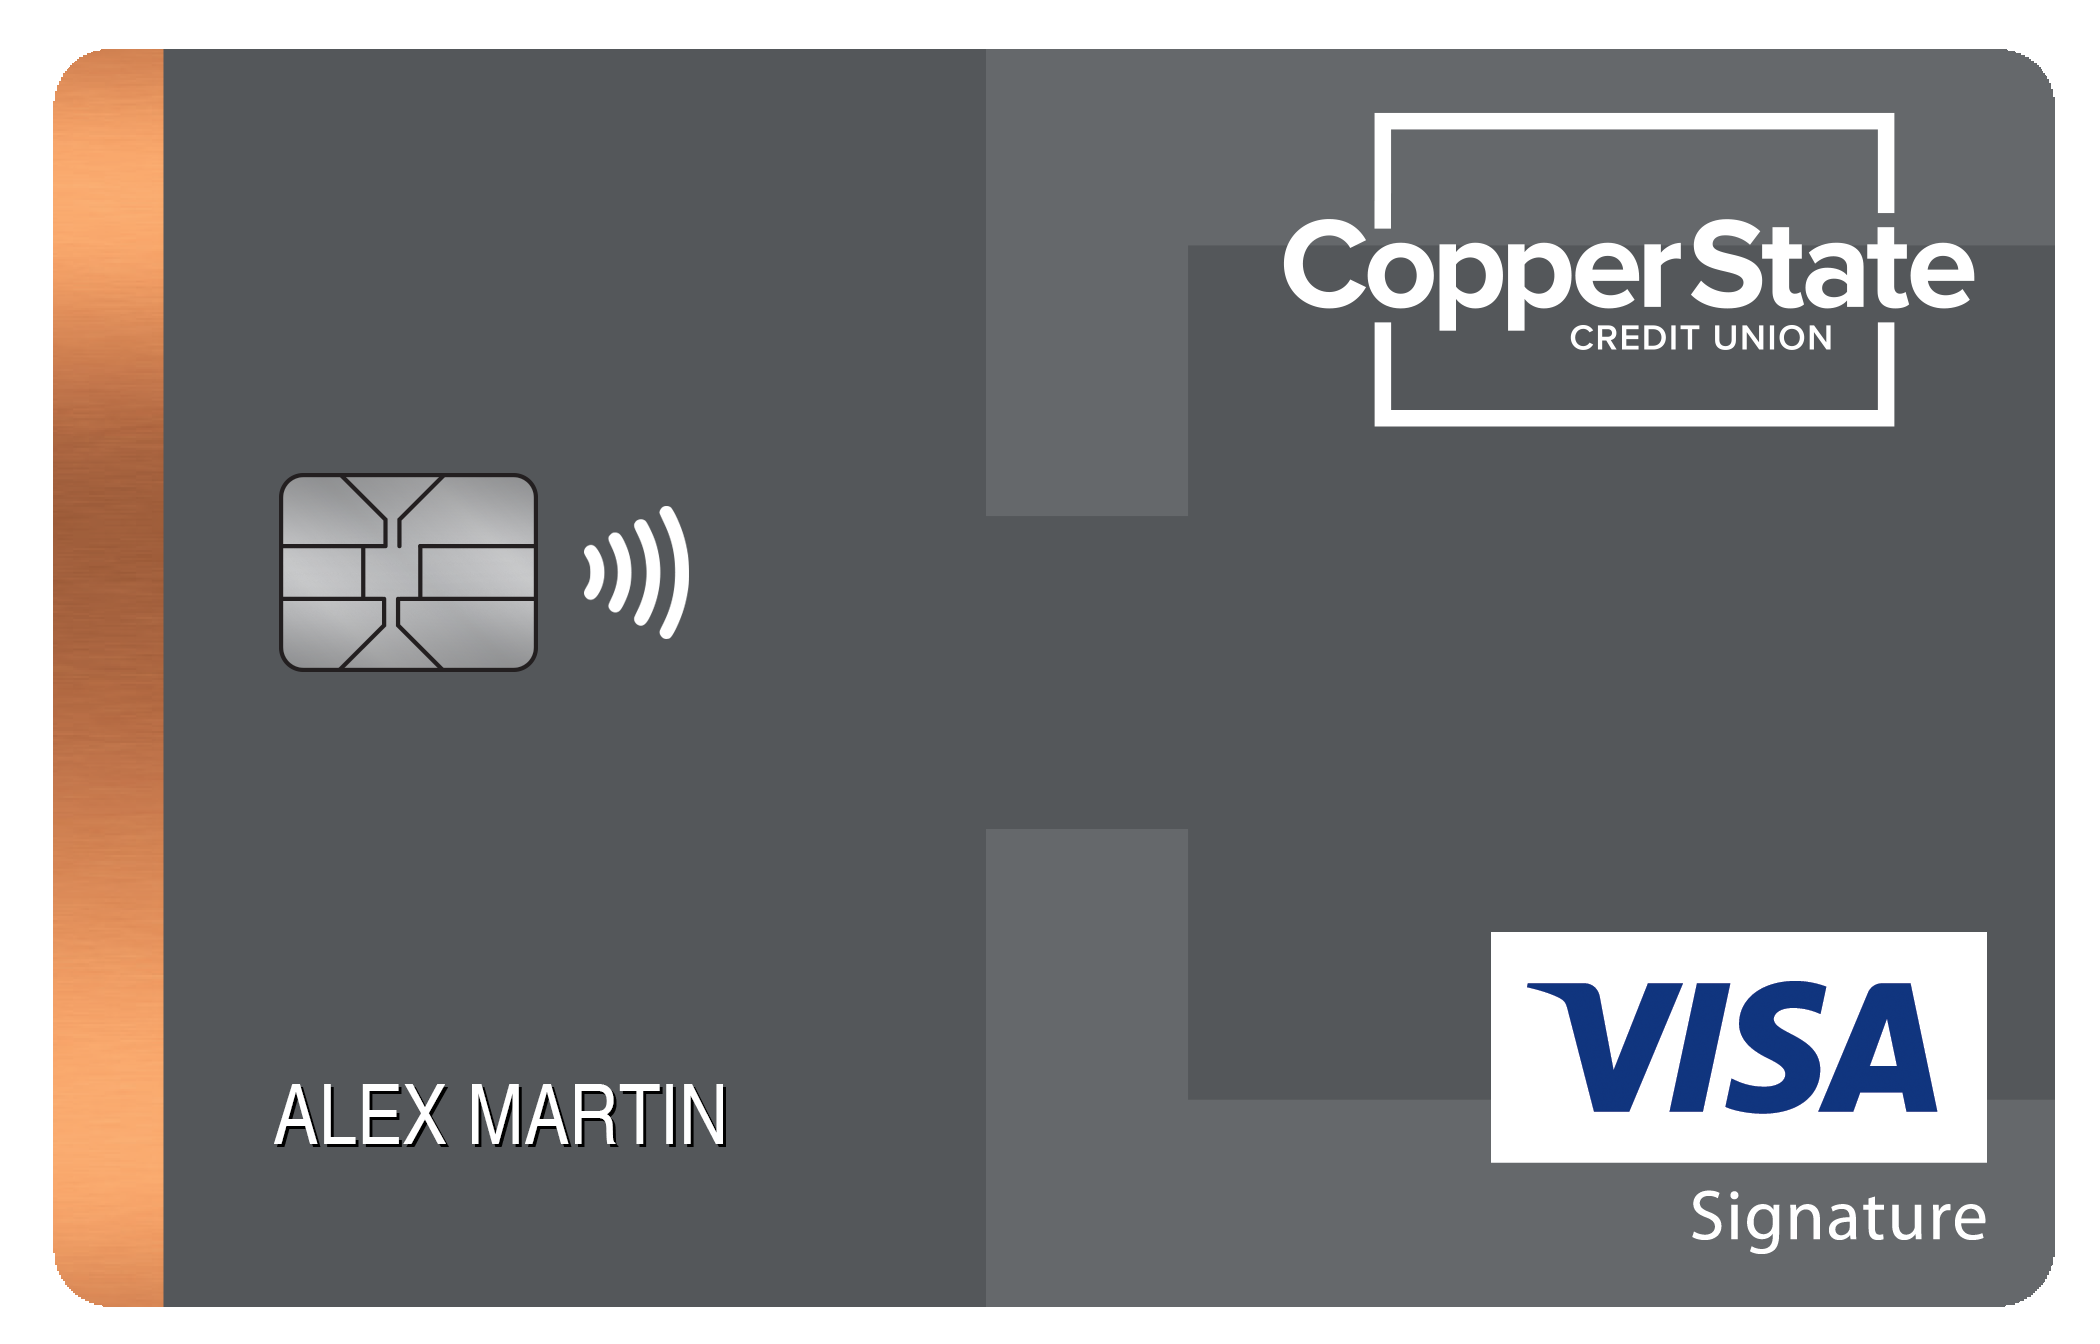 Copper State Credit Union Travel Rewards+ Card